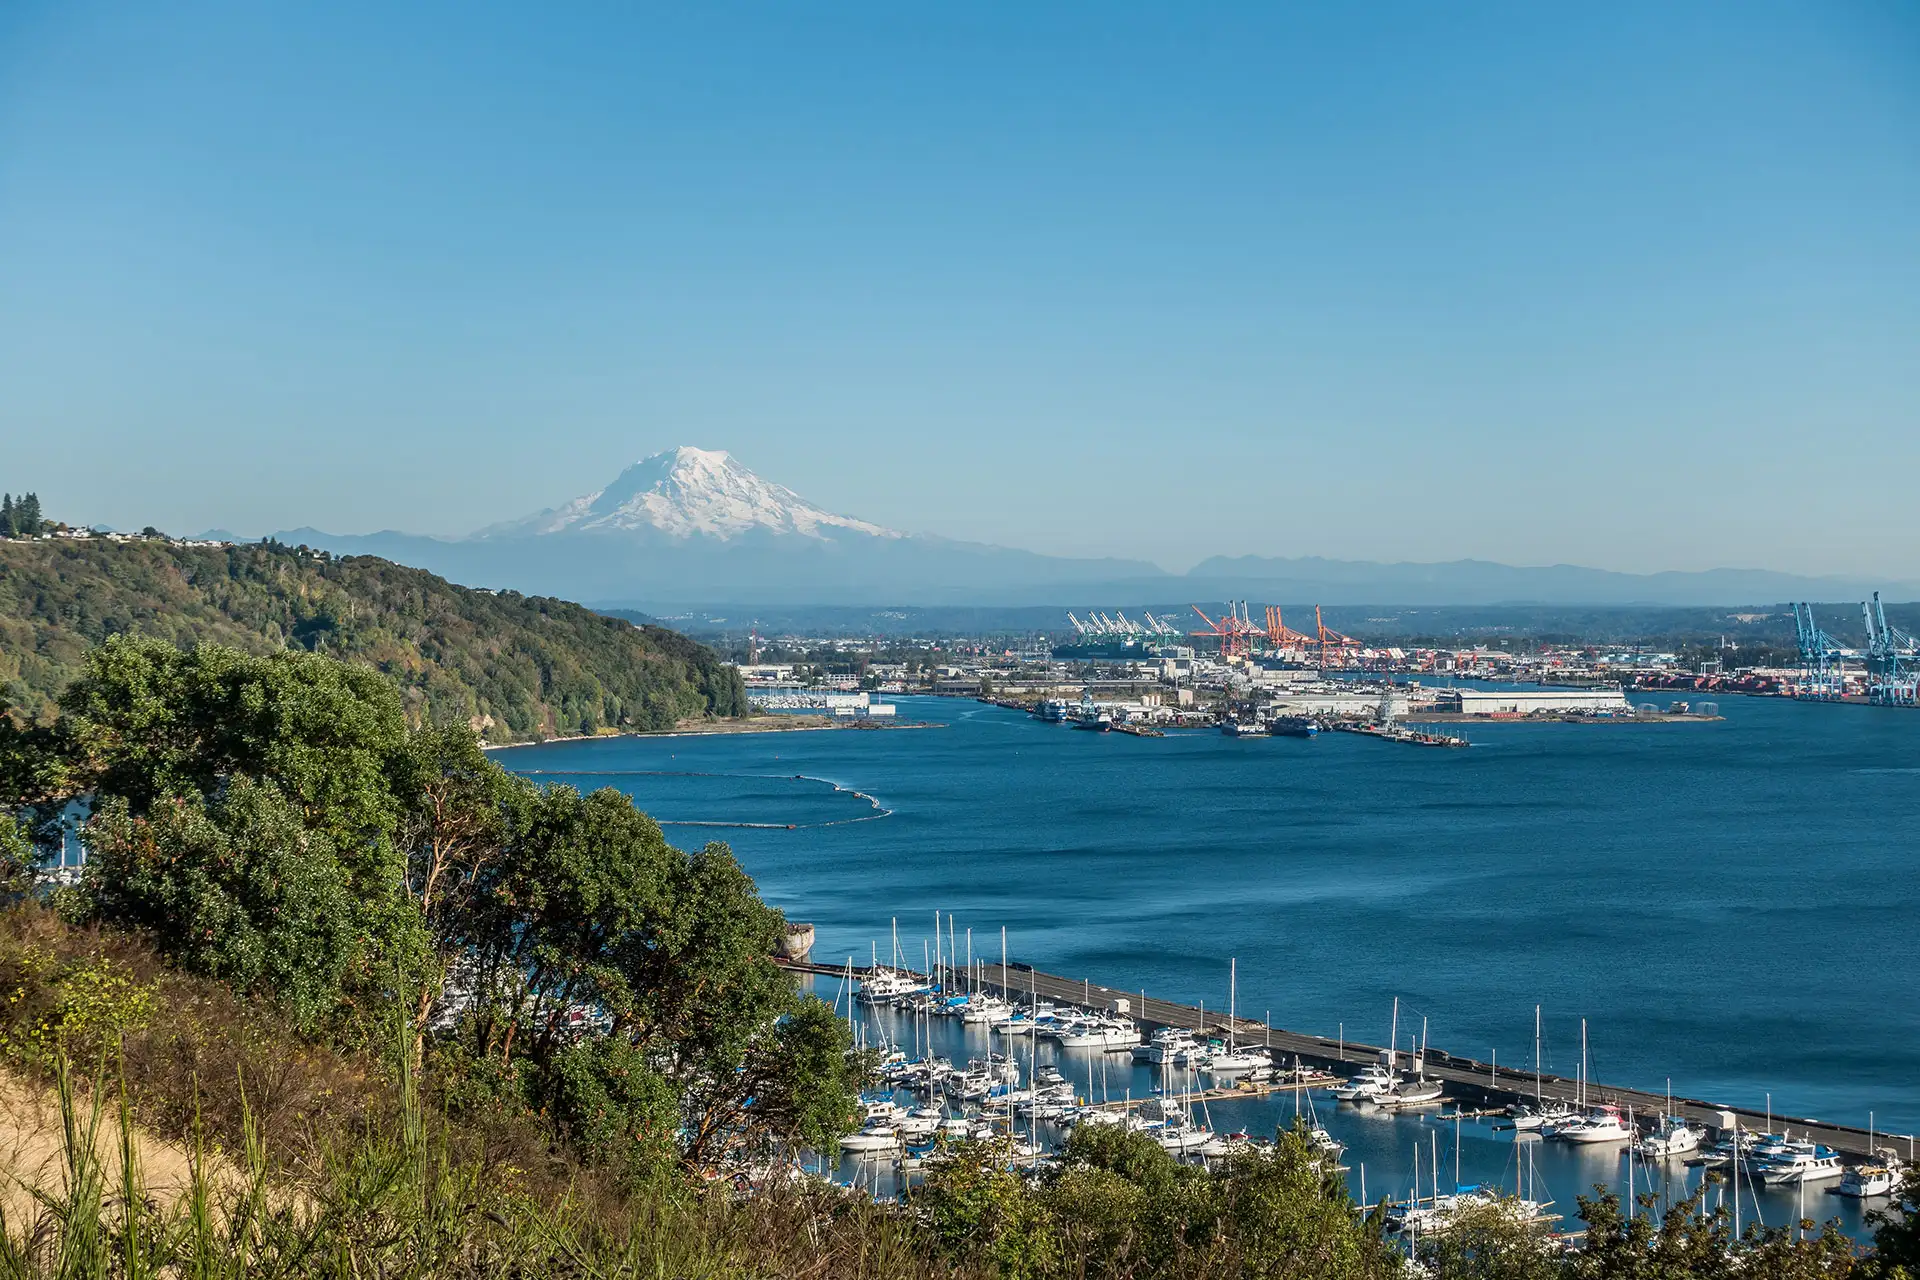 Tacoma Washington; Courtesy of George Cole Photo/Shutterstock.com